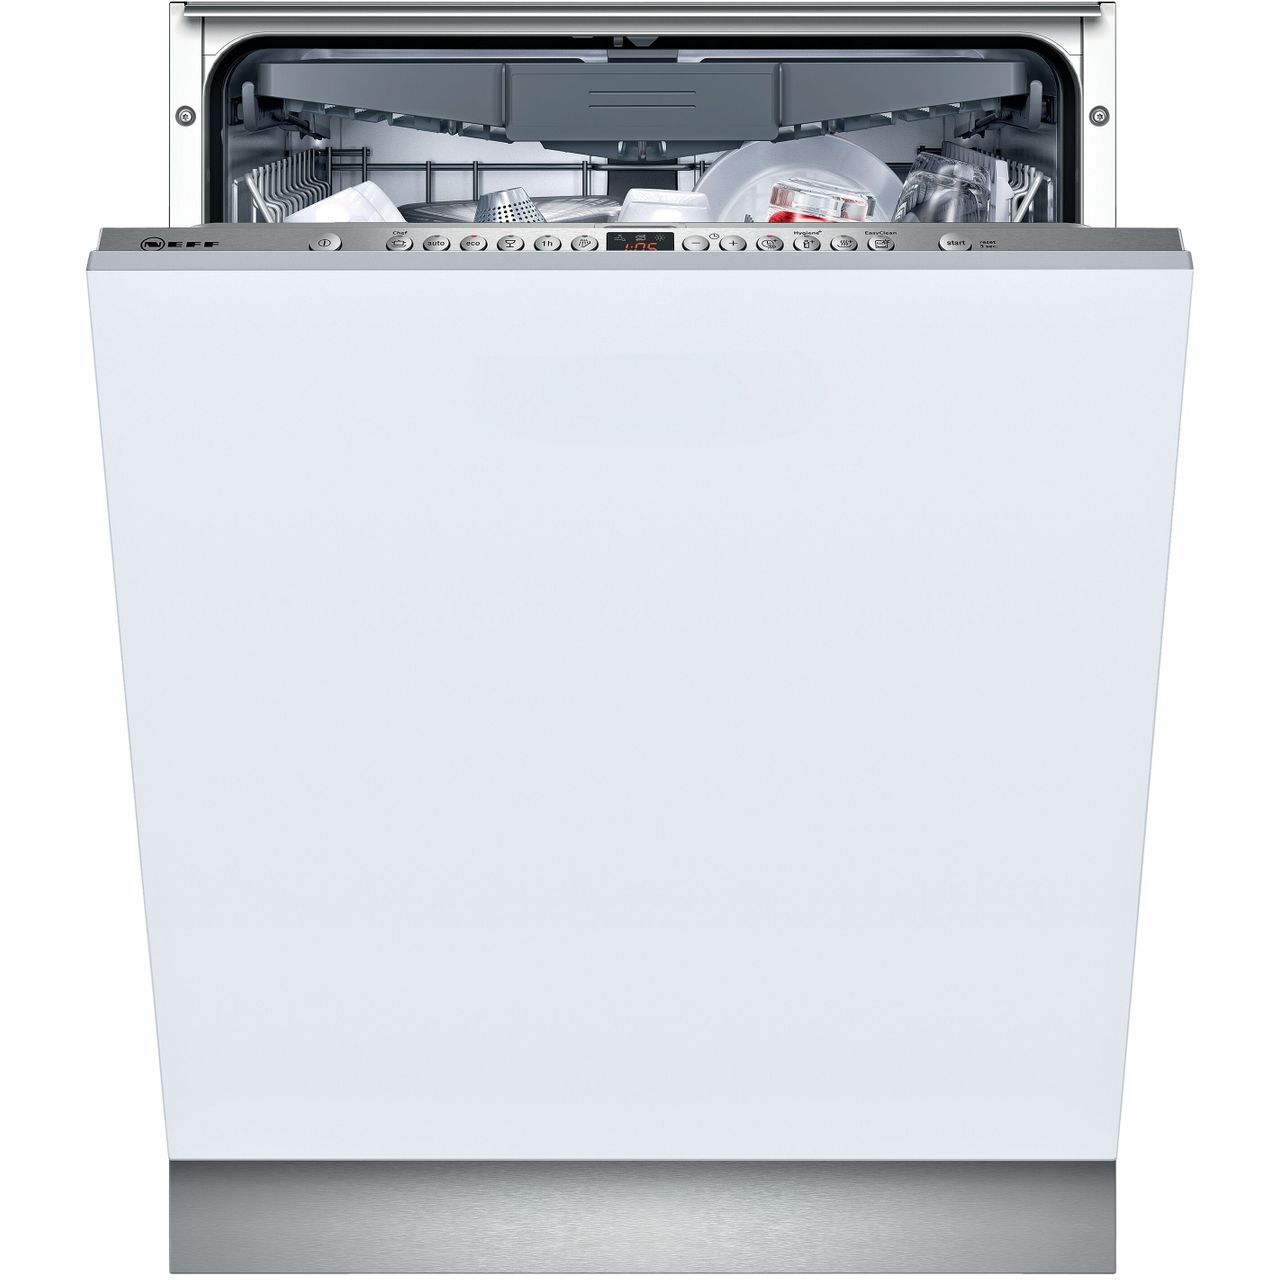 Neff S713N60X1G 60cm Fully Integrated Dishwasher